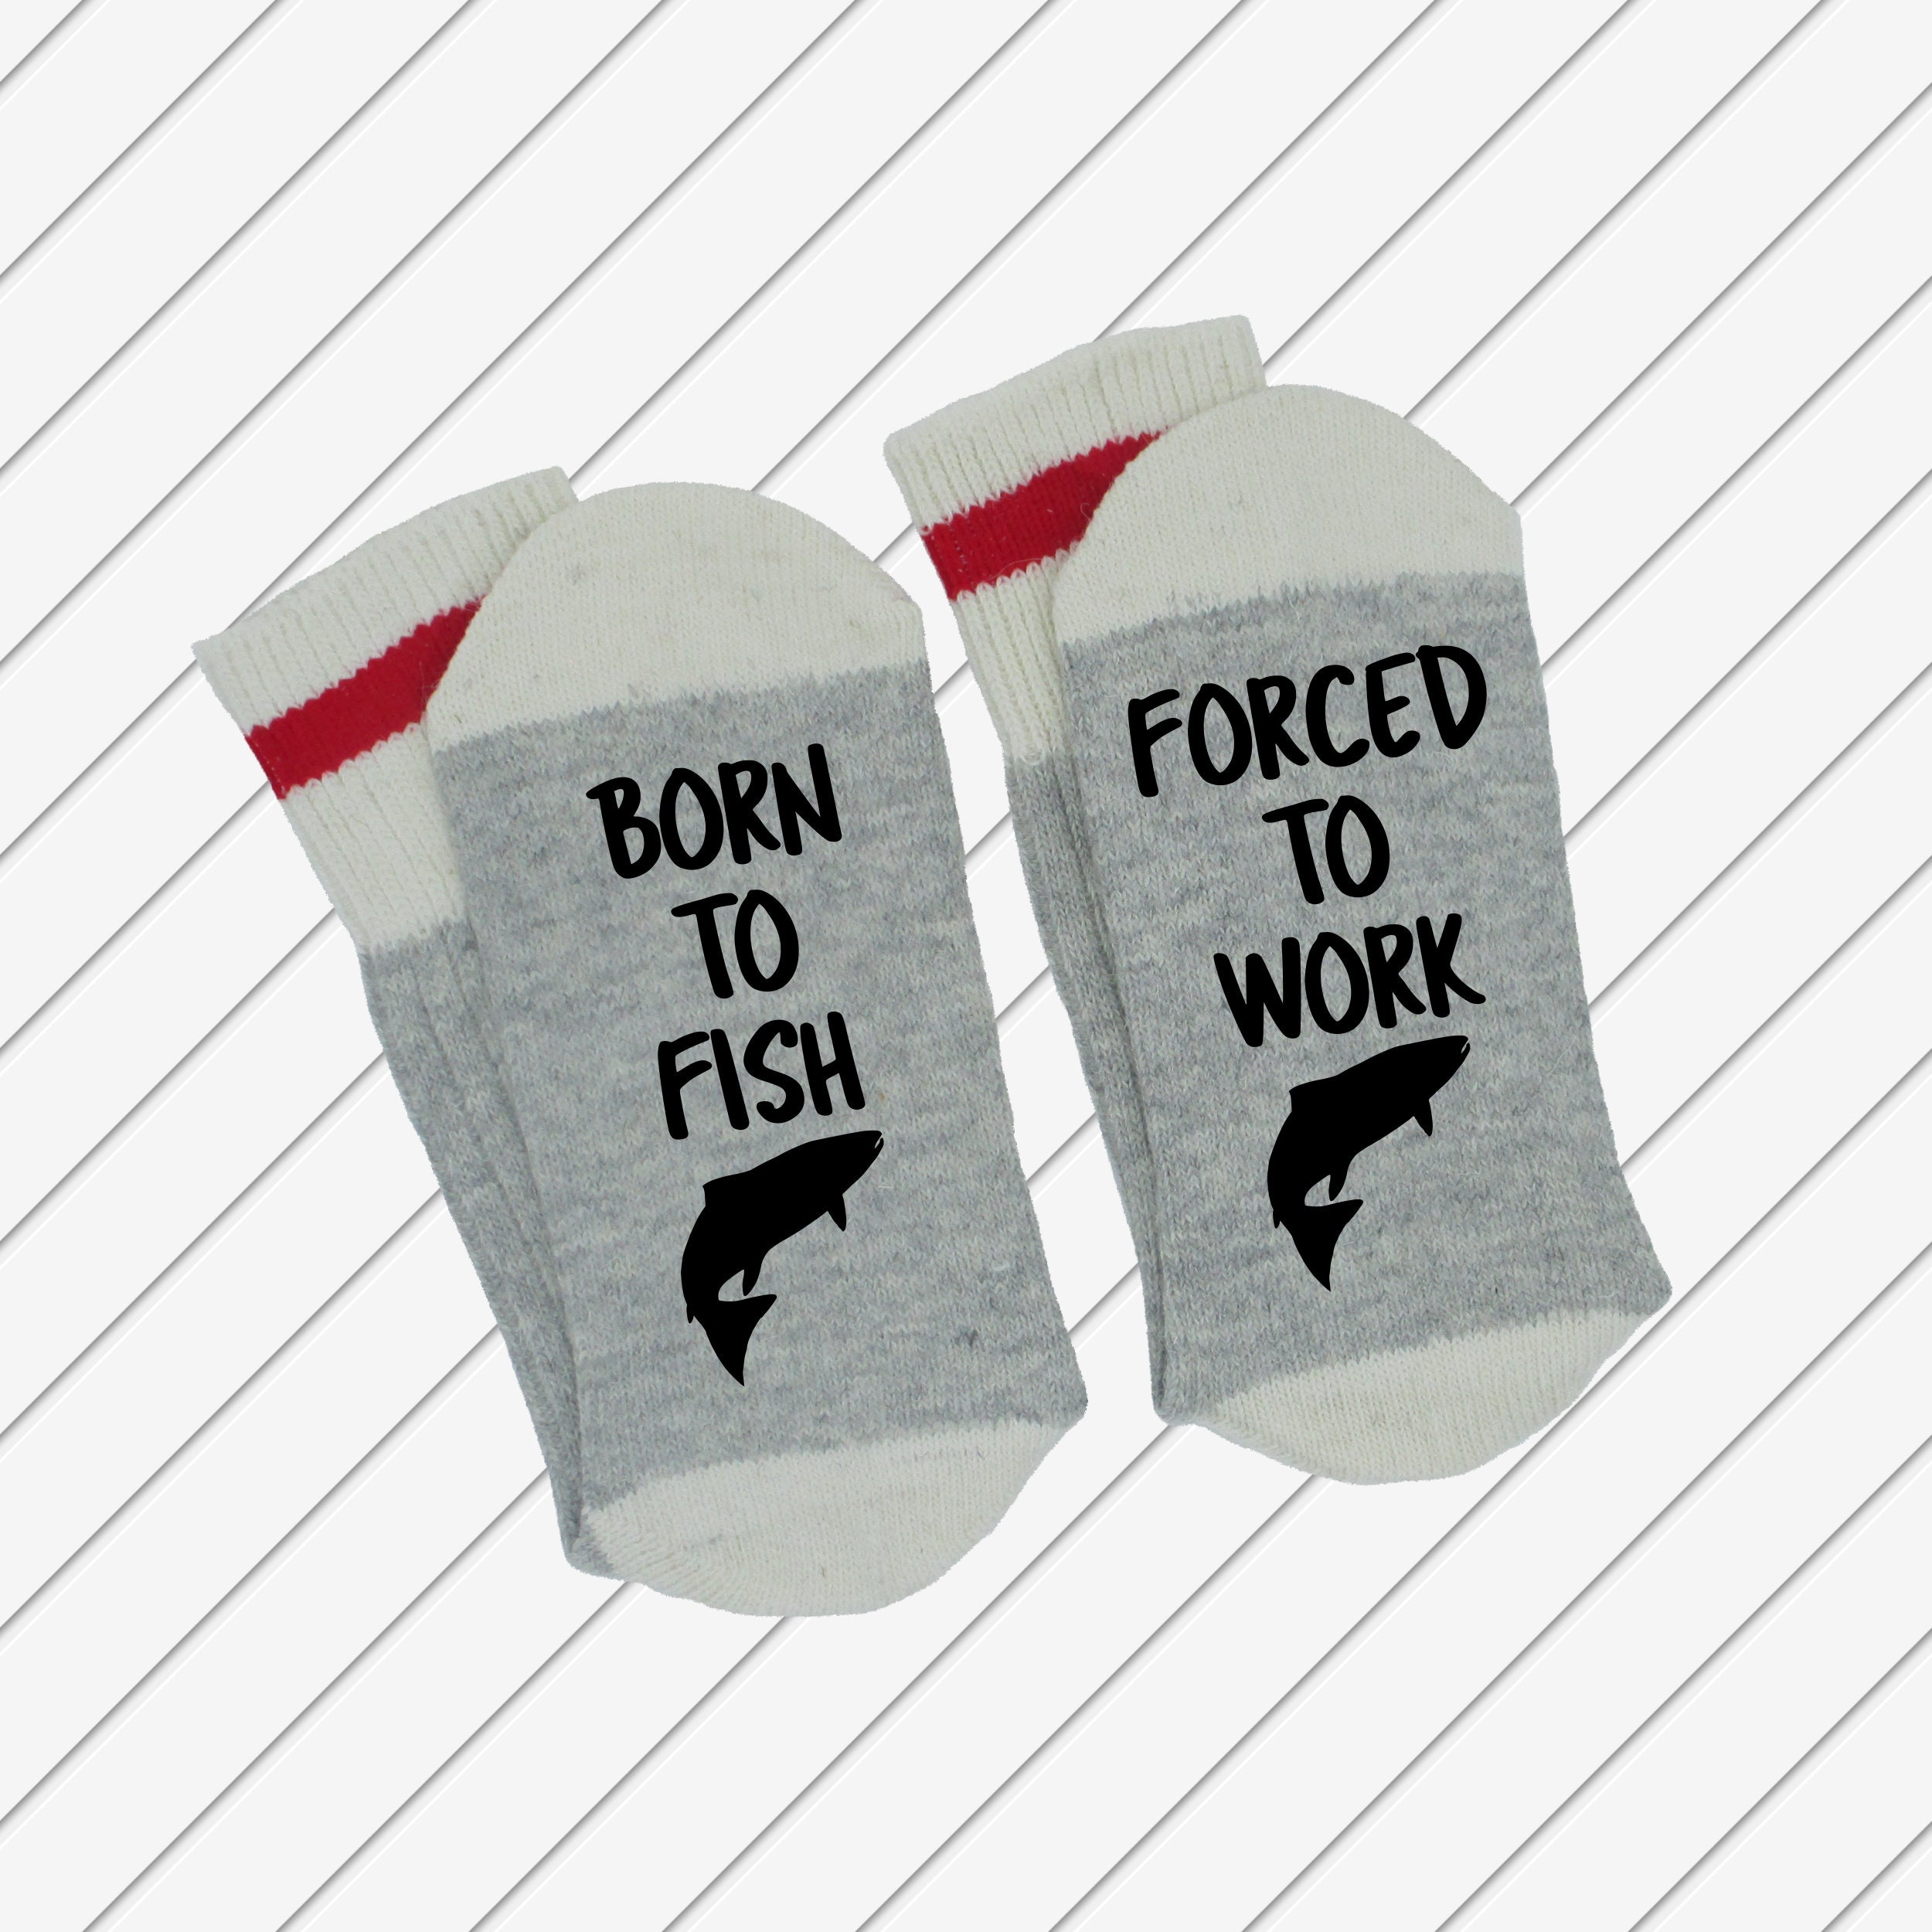 Born to Fish Forced to Work Fishing Funny Socks Novelty Socks Word Socks  Sports Outdoors 